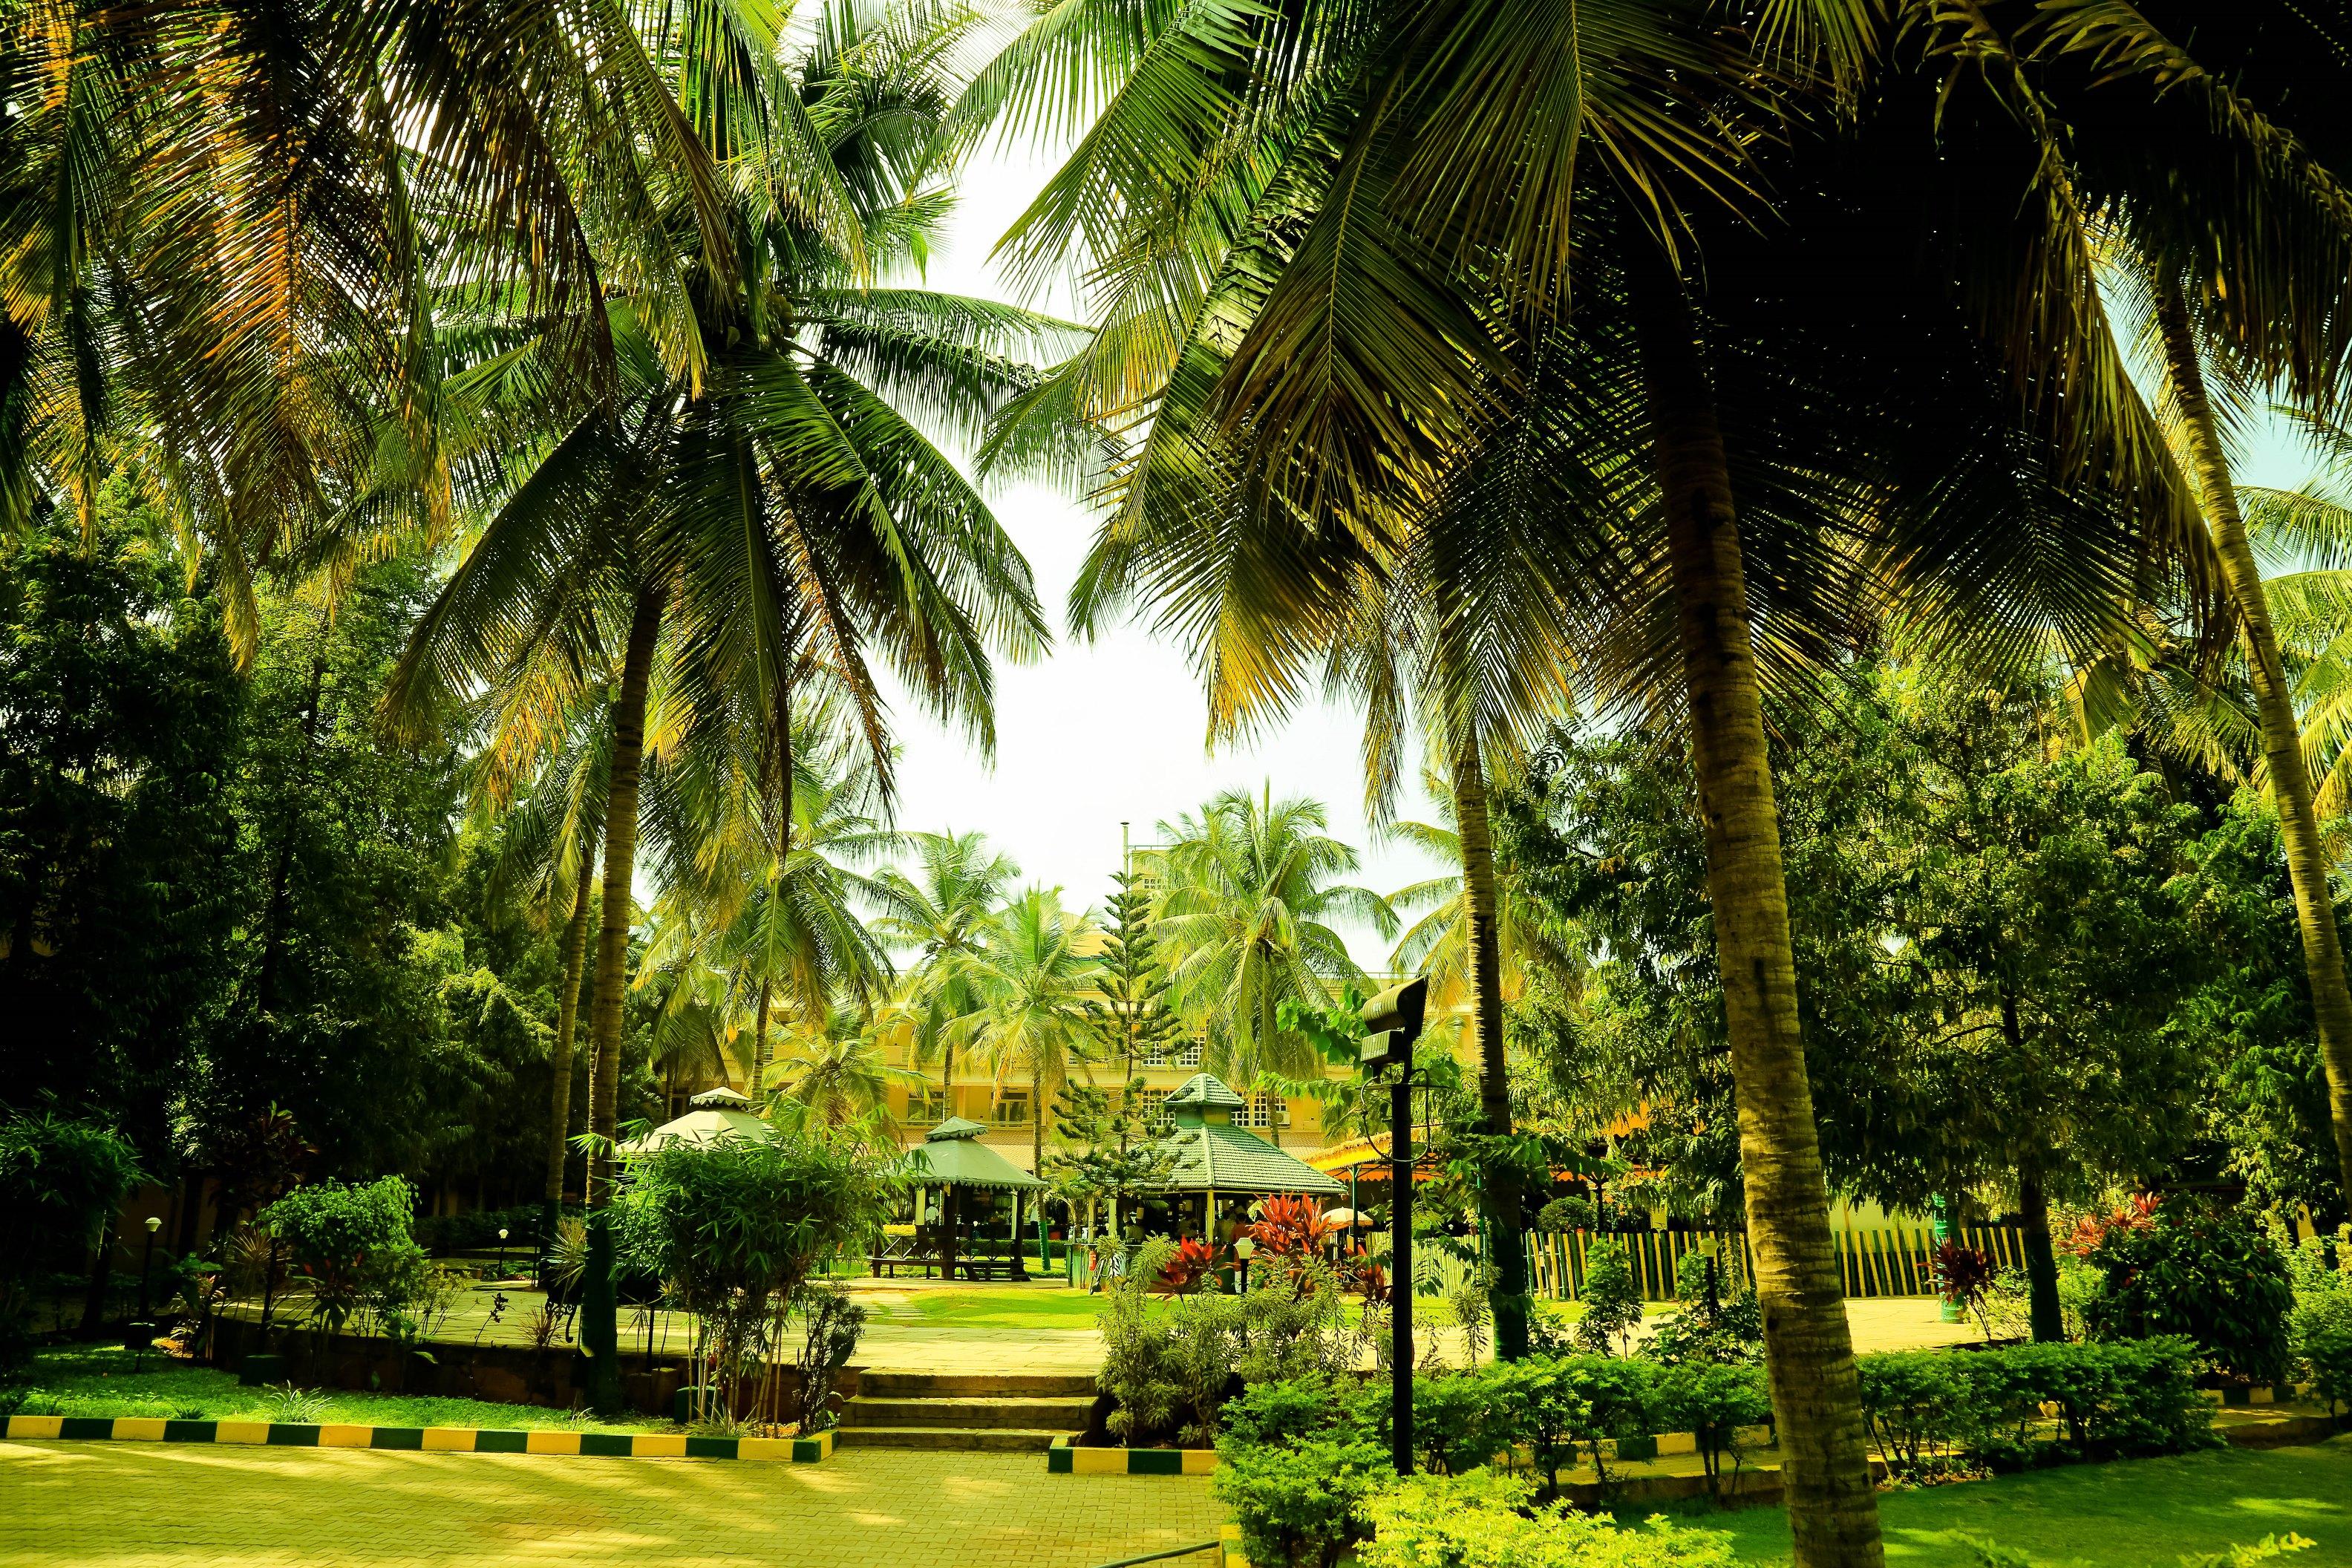 Royal Orchid Resort & Convention Centre, Yelahanka Bengaluru Zewnętrze zdjęcie